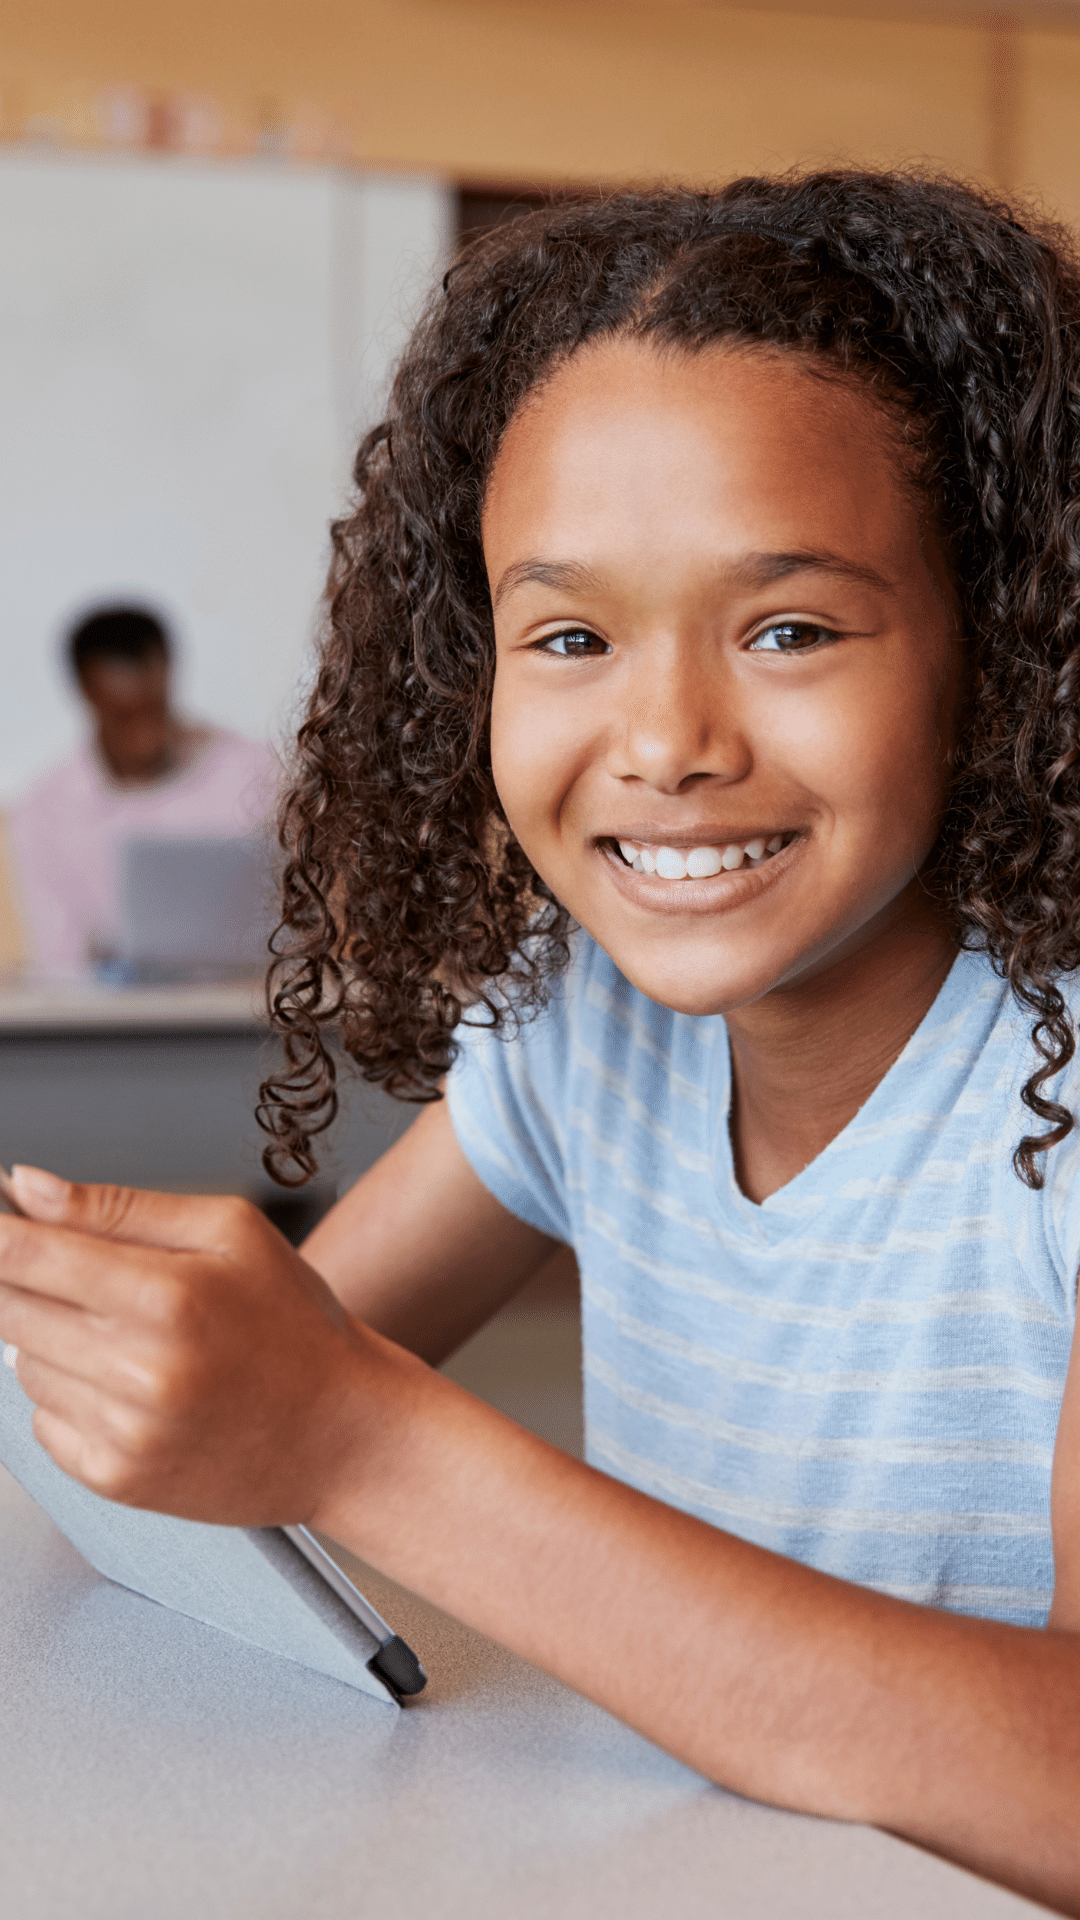 10 Steps to Improve Your Child’s Study Skills​